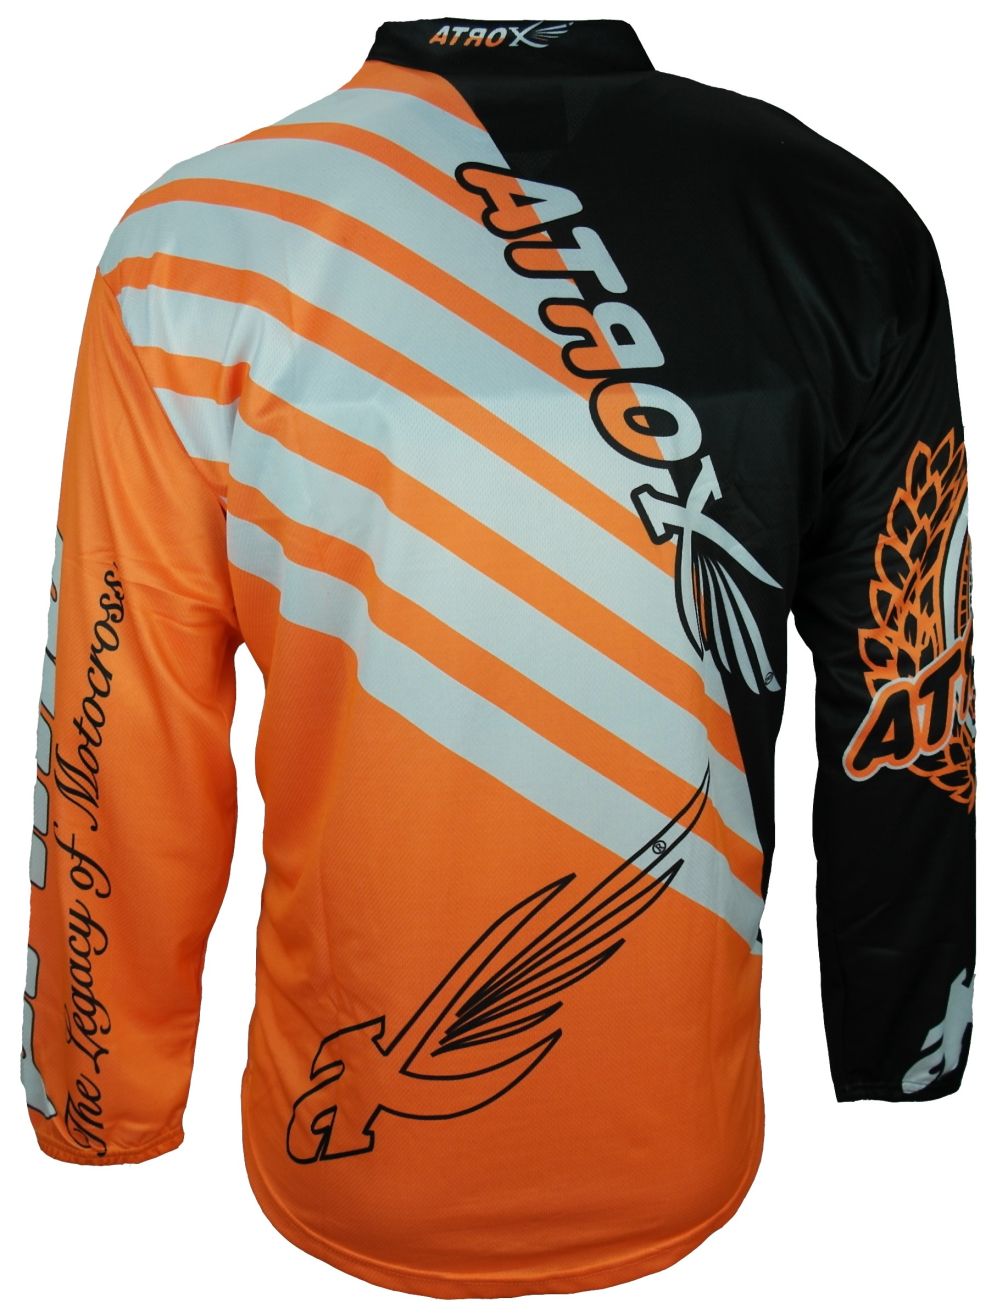 Heyberry MX-Cross Quad Motocross Shirt Jersey Trikot schwarz weiß orange M - XXL